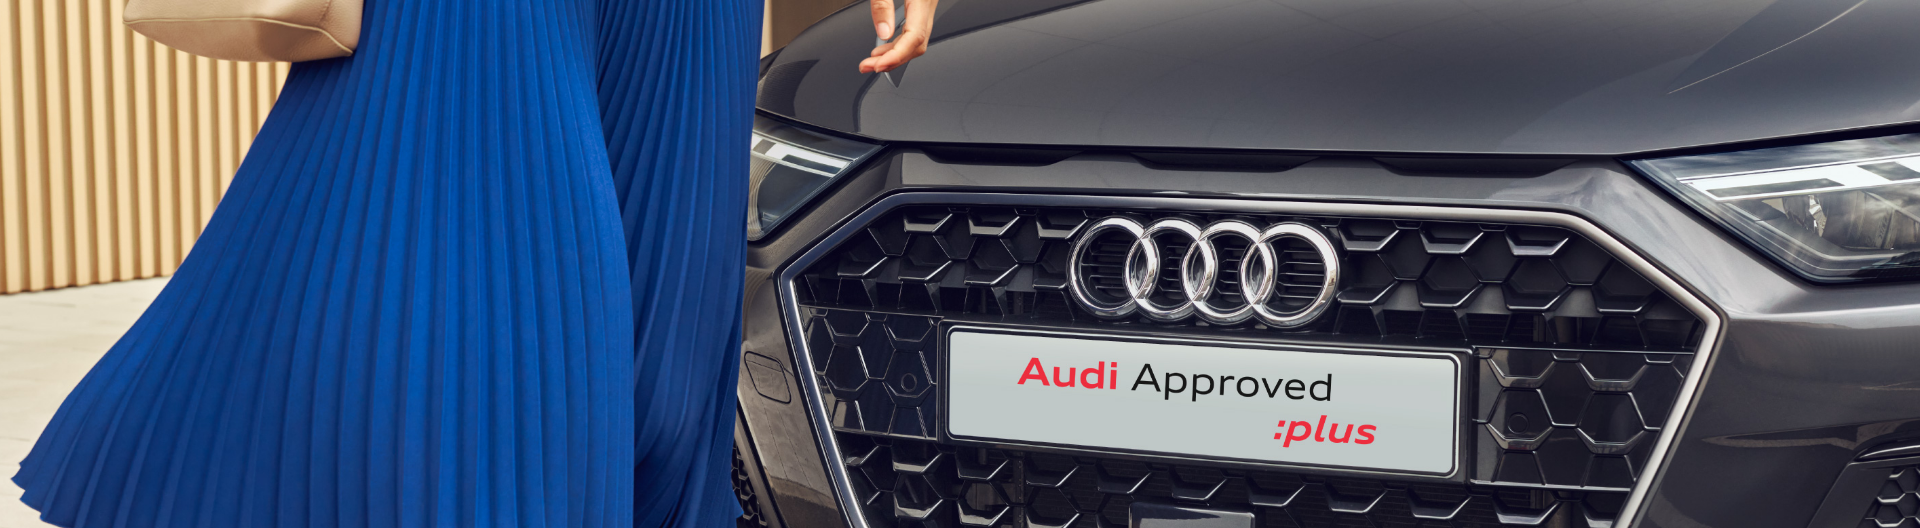 OV - Audi Approved Plus